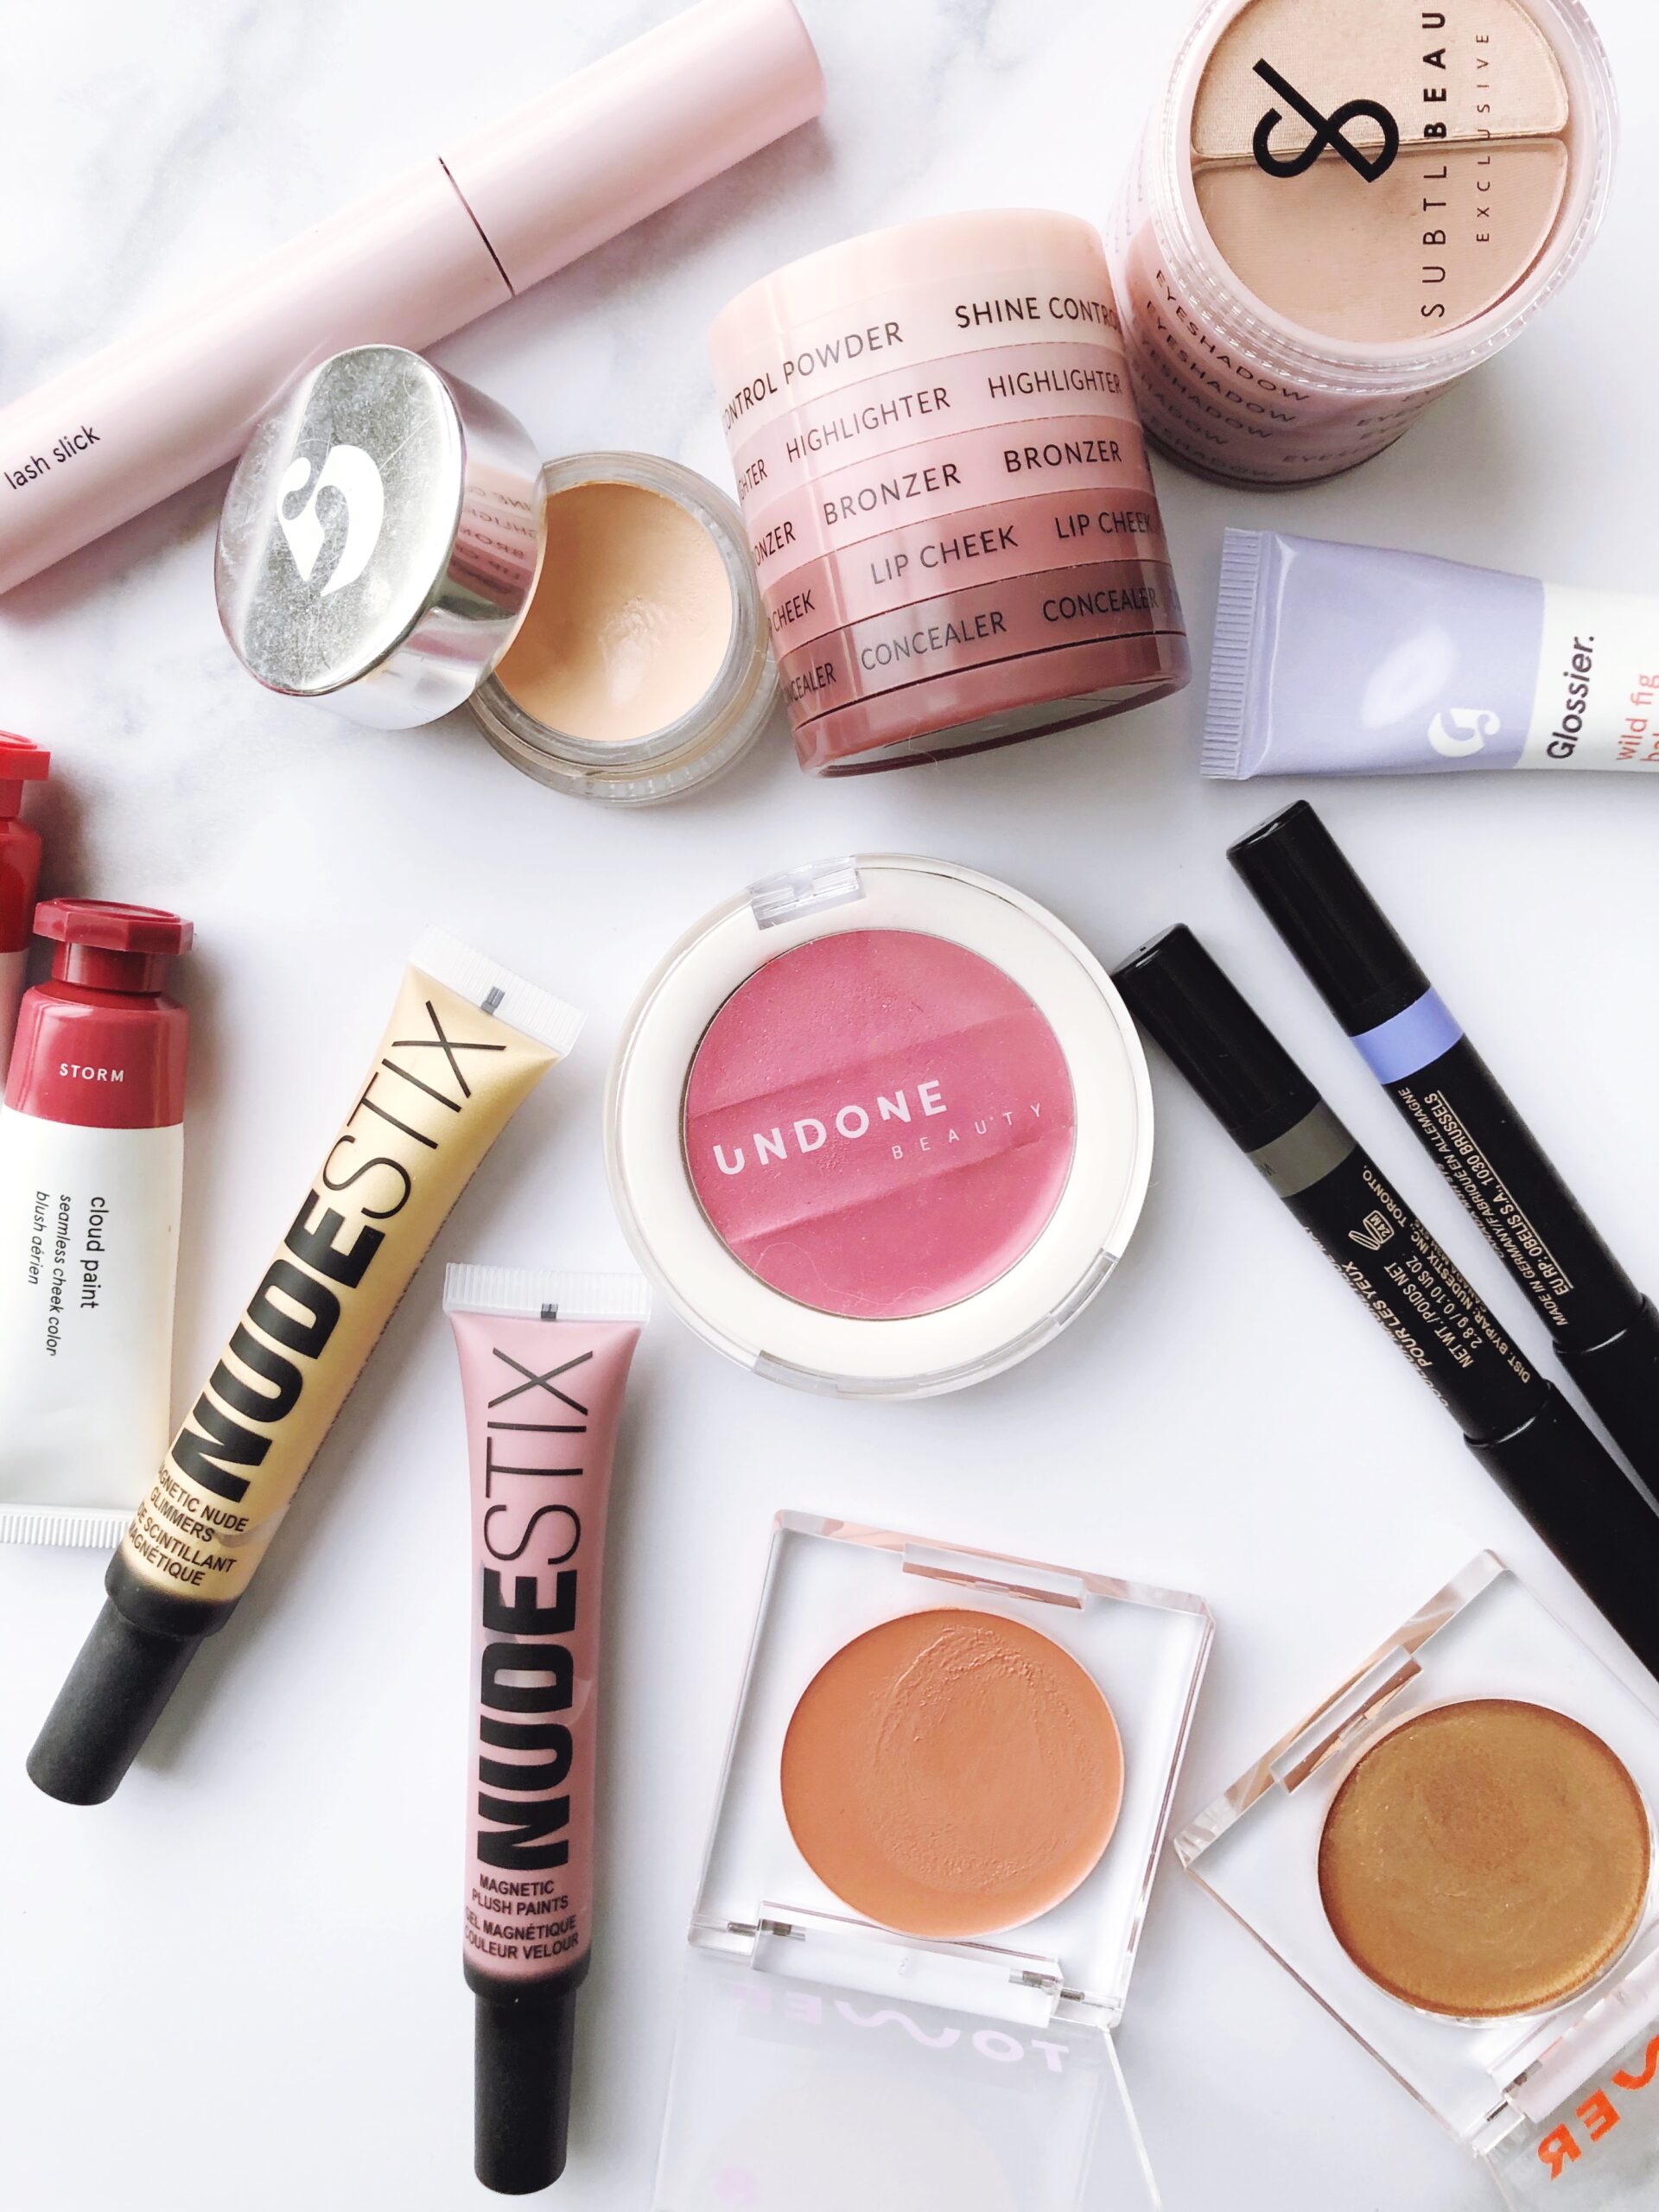 Top 5 Best Minimalist Makeup Brands to Shop LaptrinhX / News